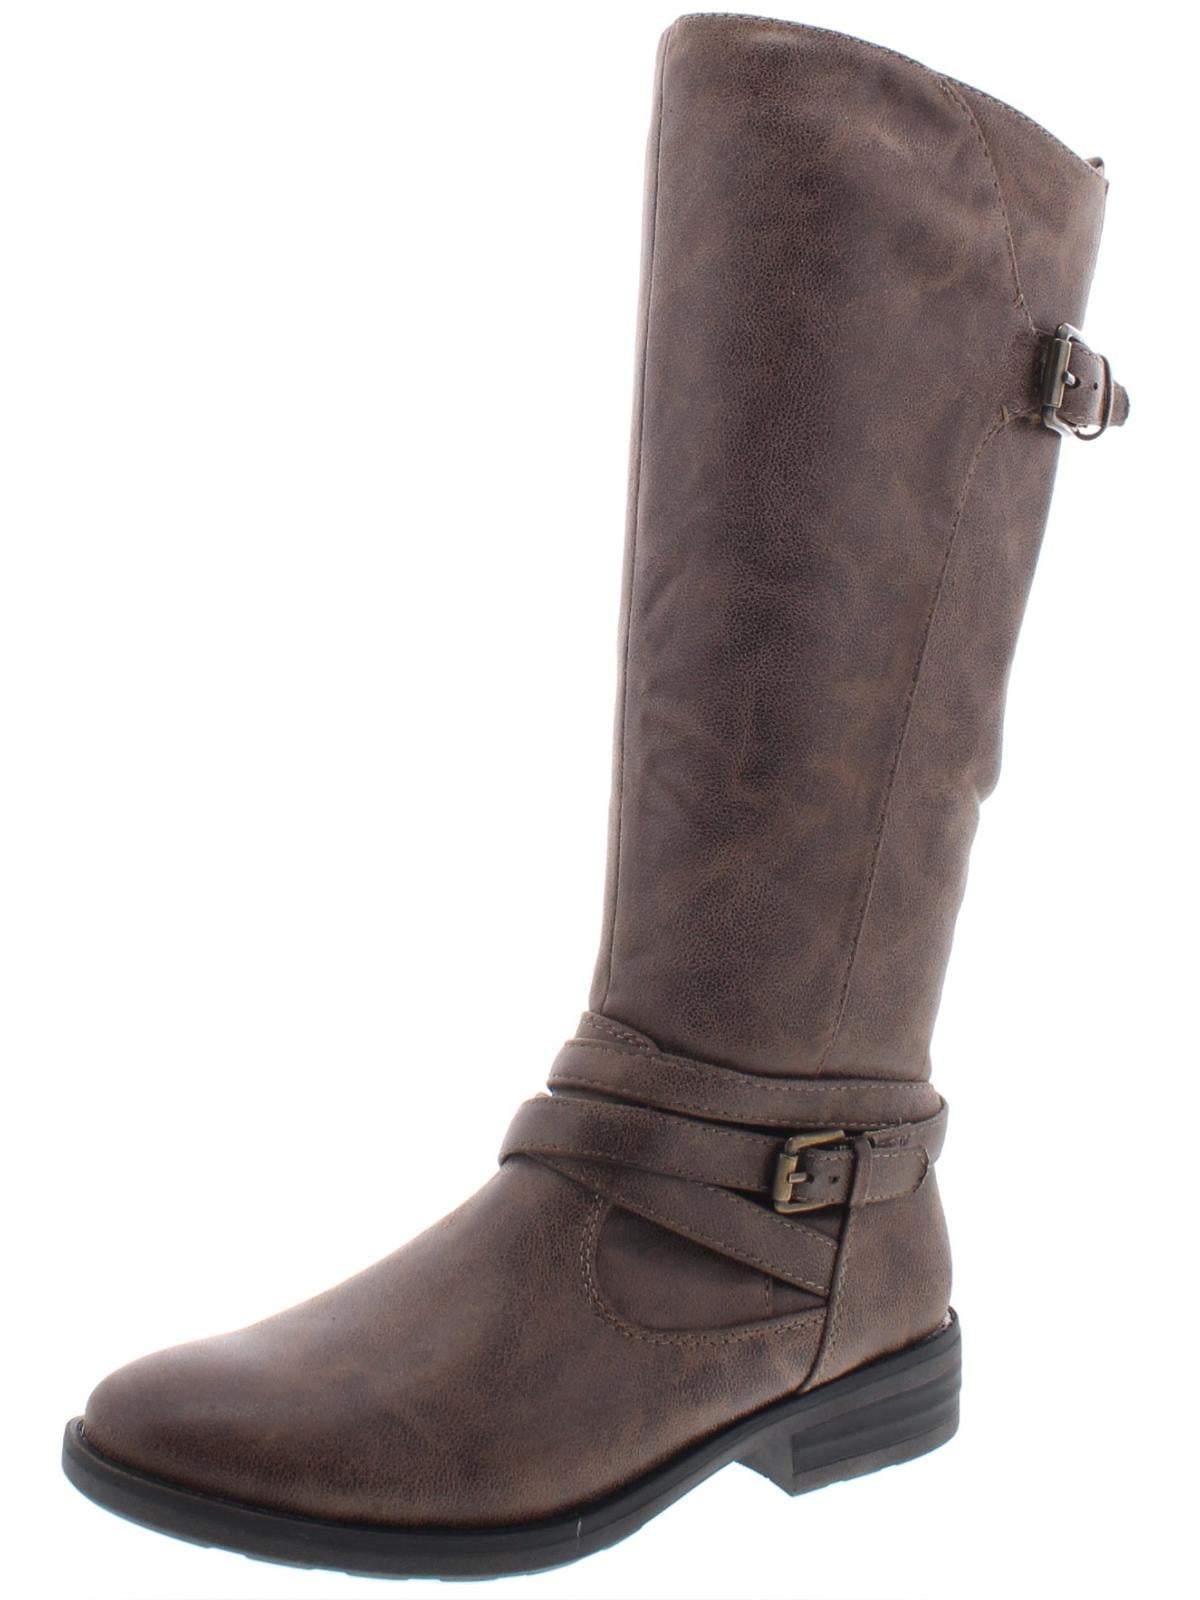 Bare Traps Womens Wylla Leather Closed Toe Mid-Calf Fashion Boots